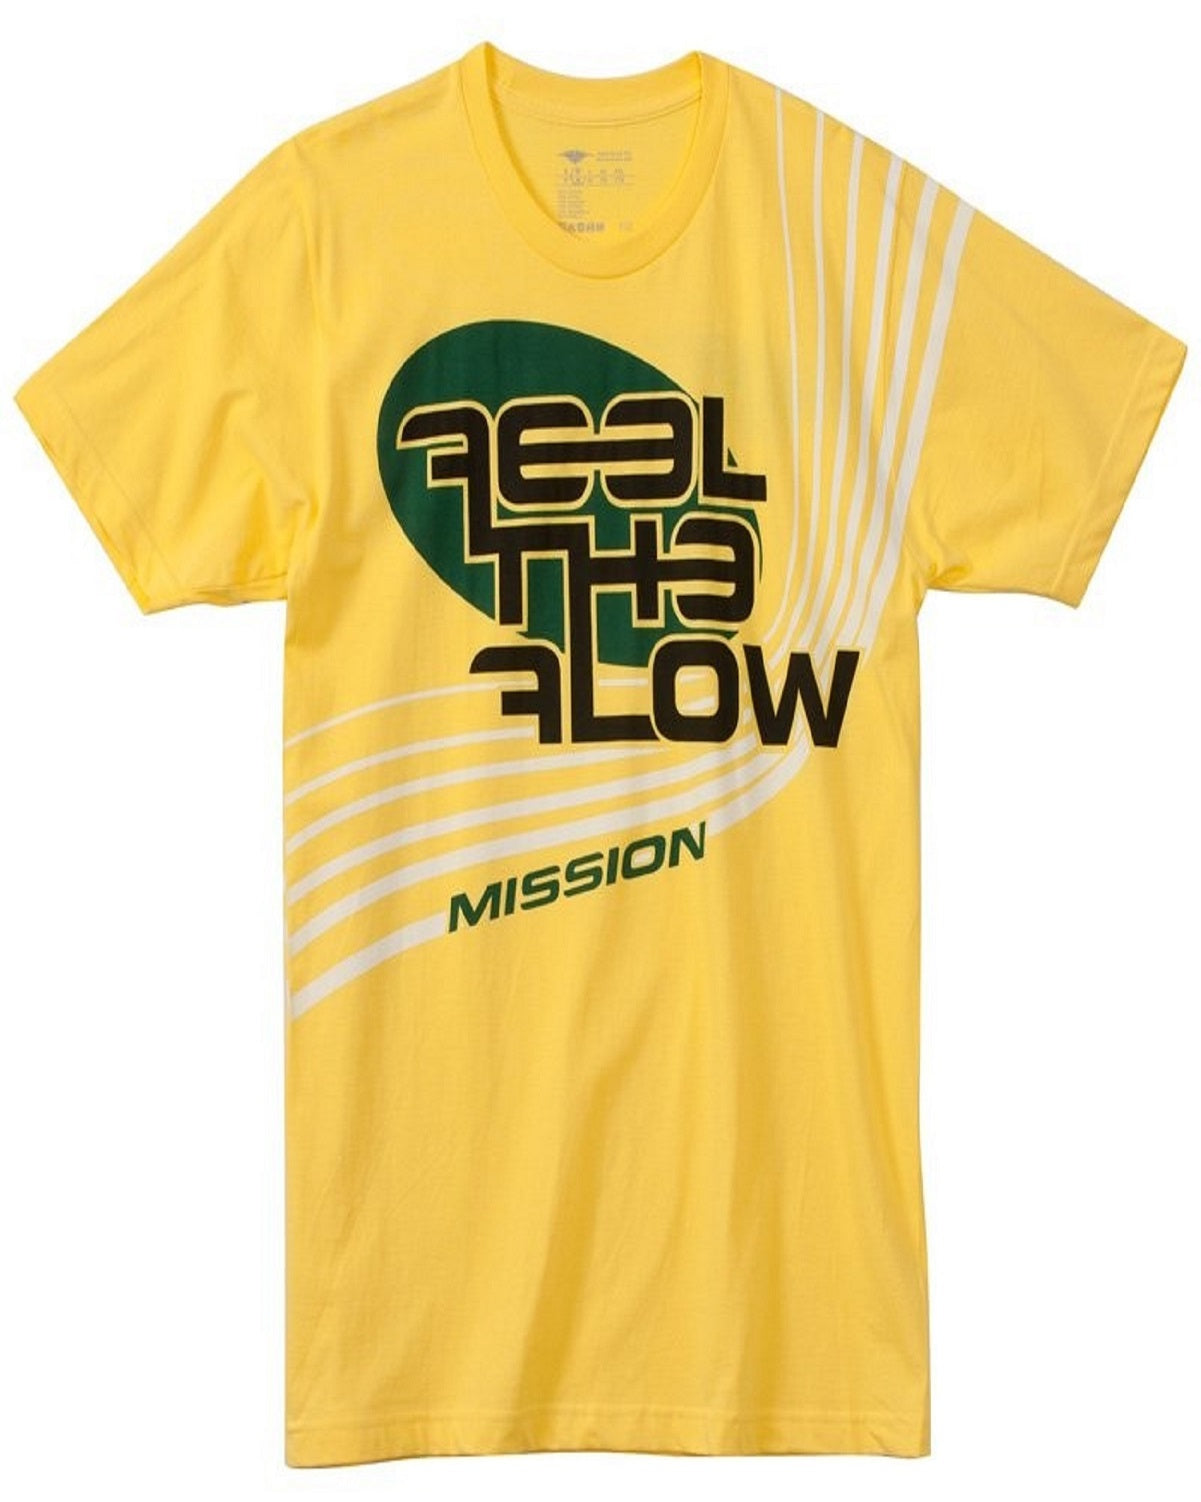 Mission Feel the Flow Senior Short Sleeve Tee Shirt, Small